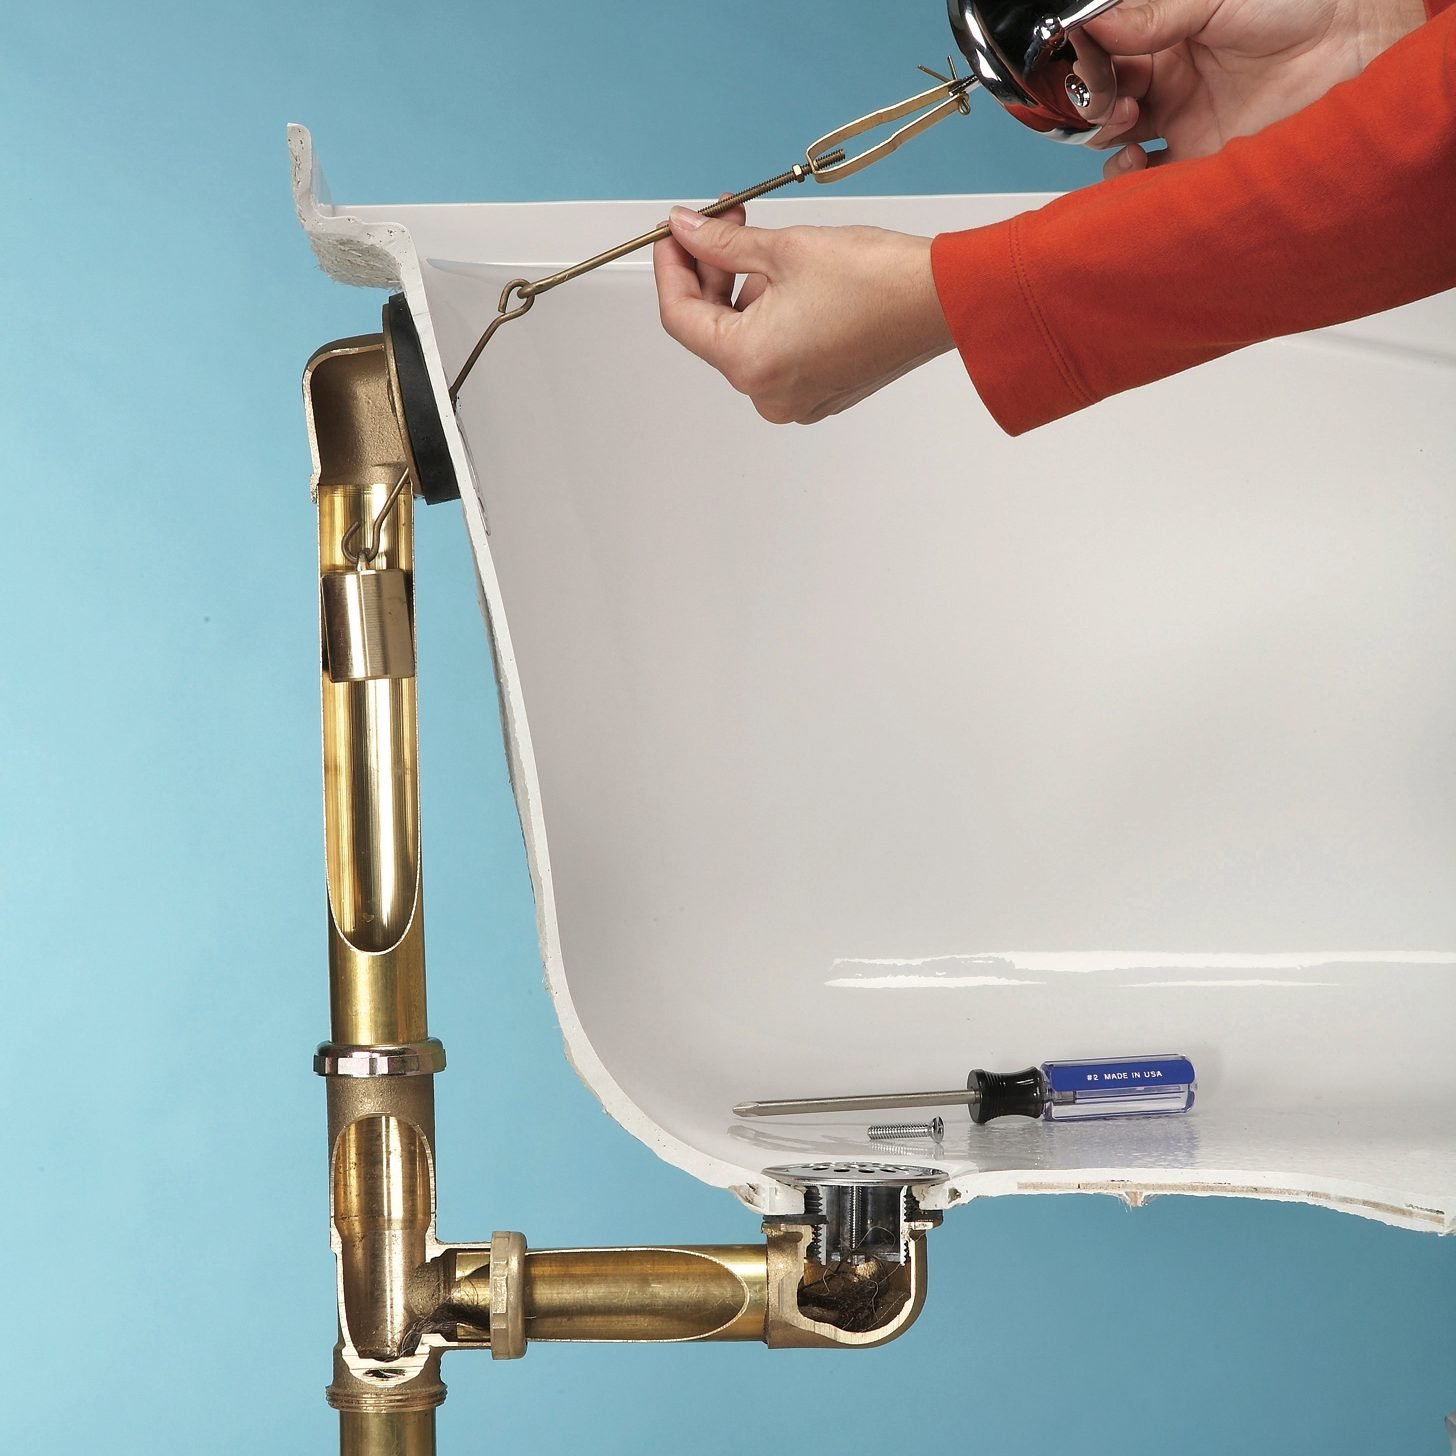 How To Remove a Stubborn & Stuck Bathtub Drain -Jonny DIY 